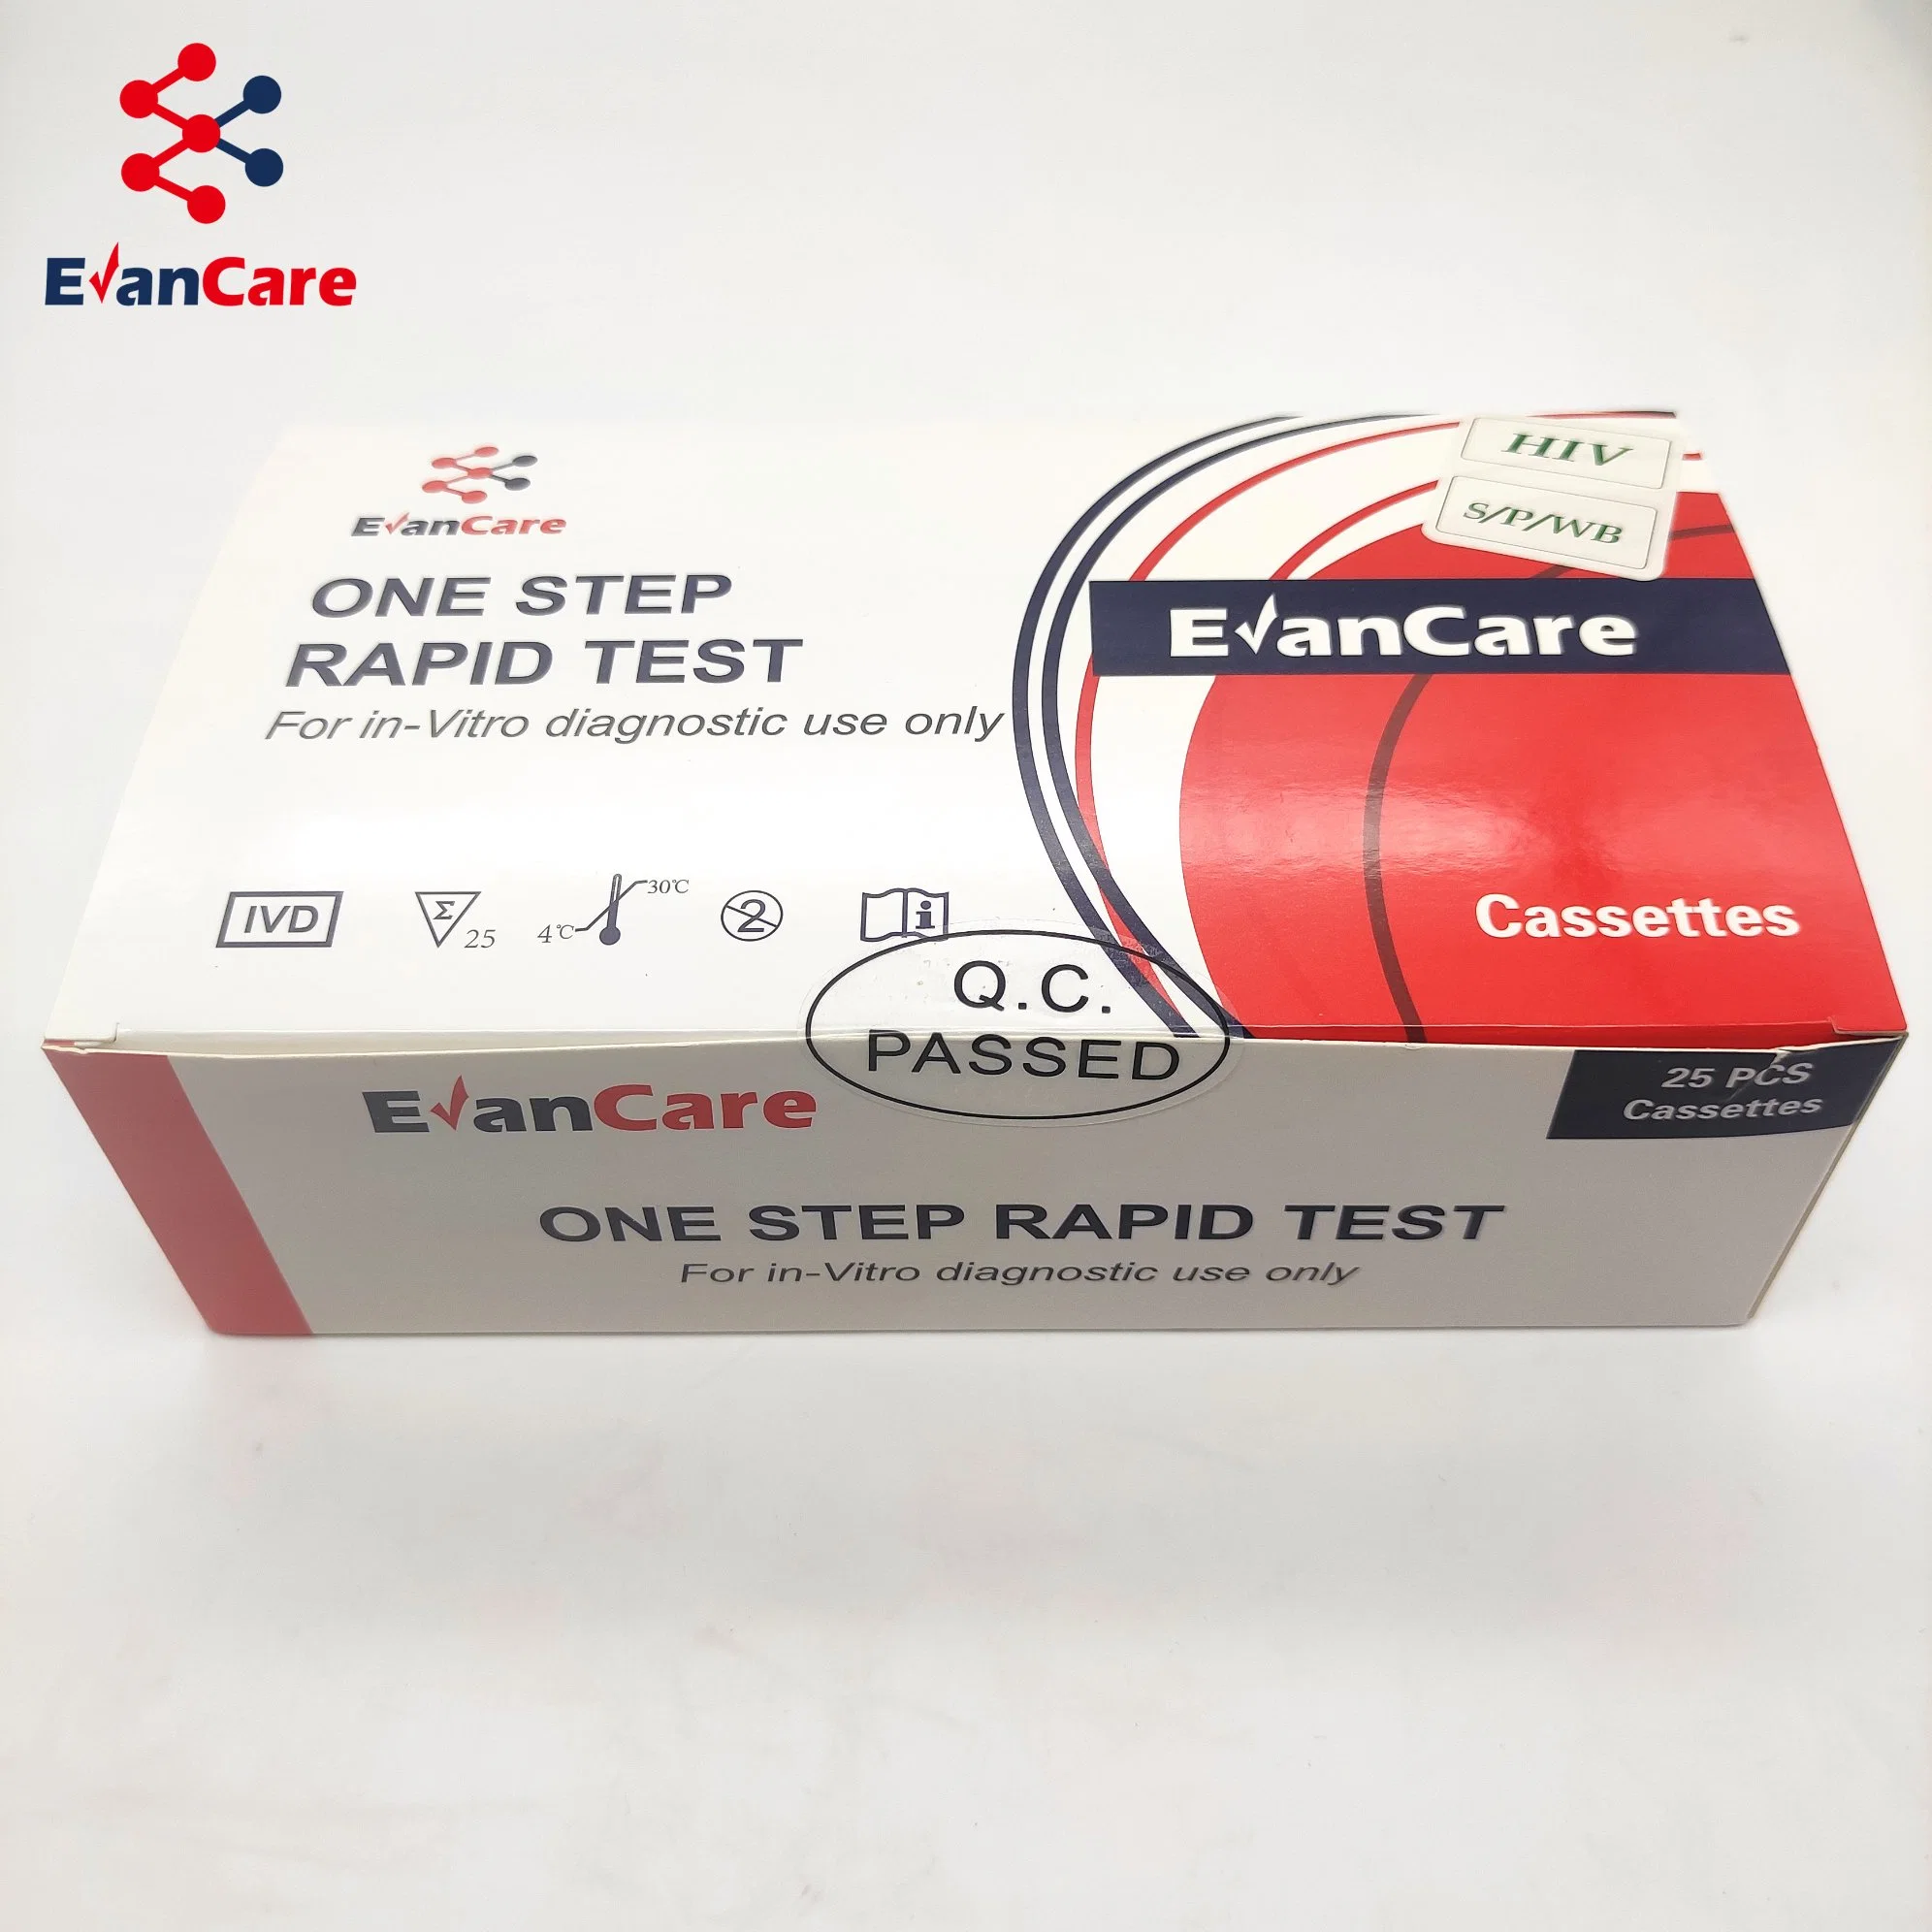 Home HIV Rapid Test Kits